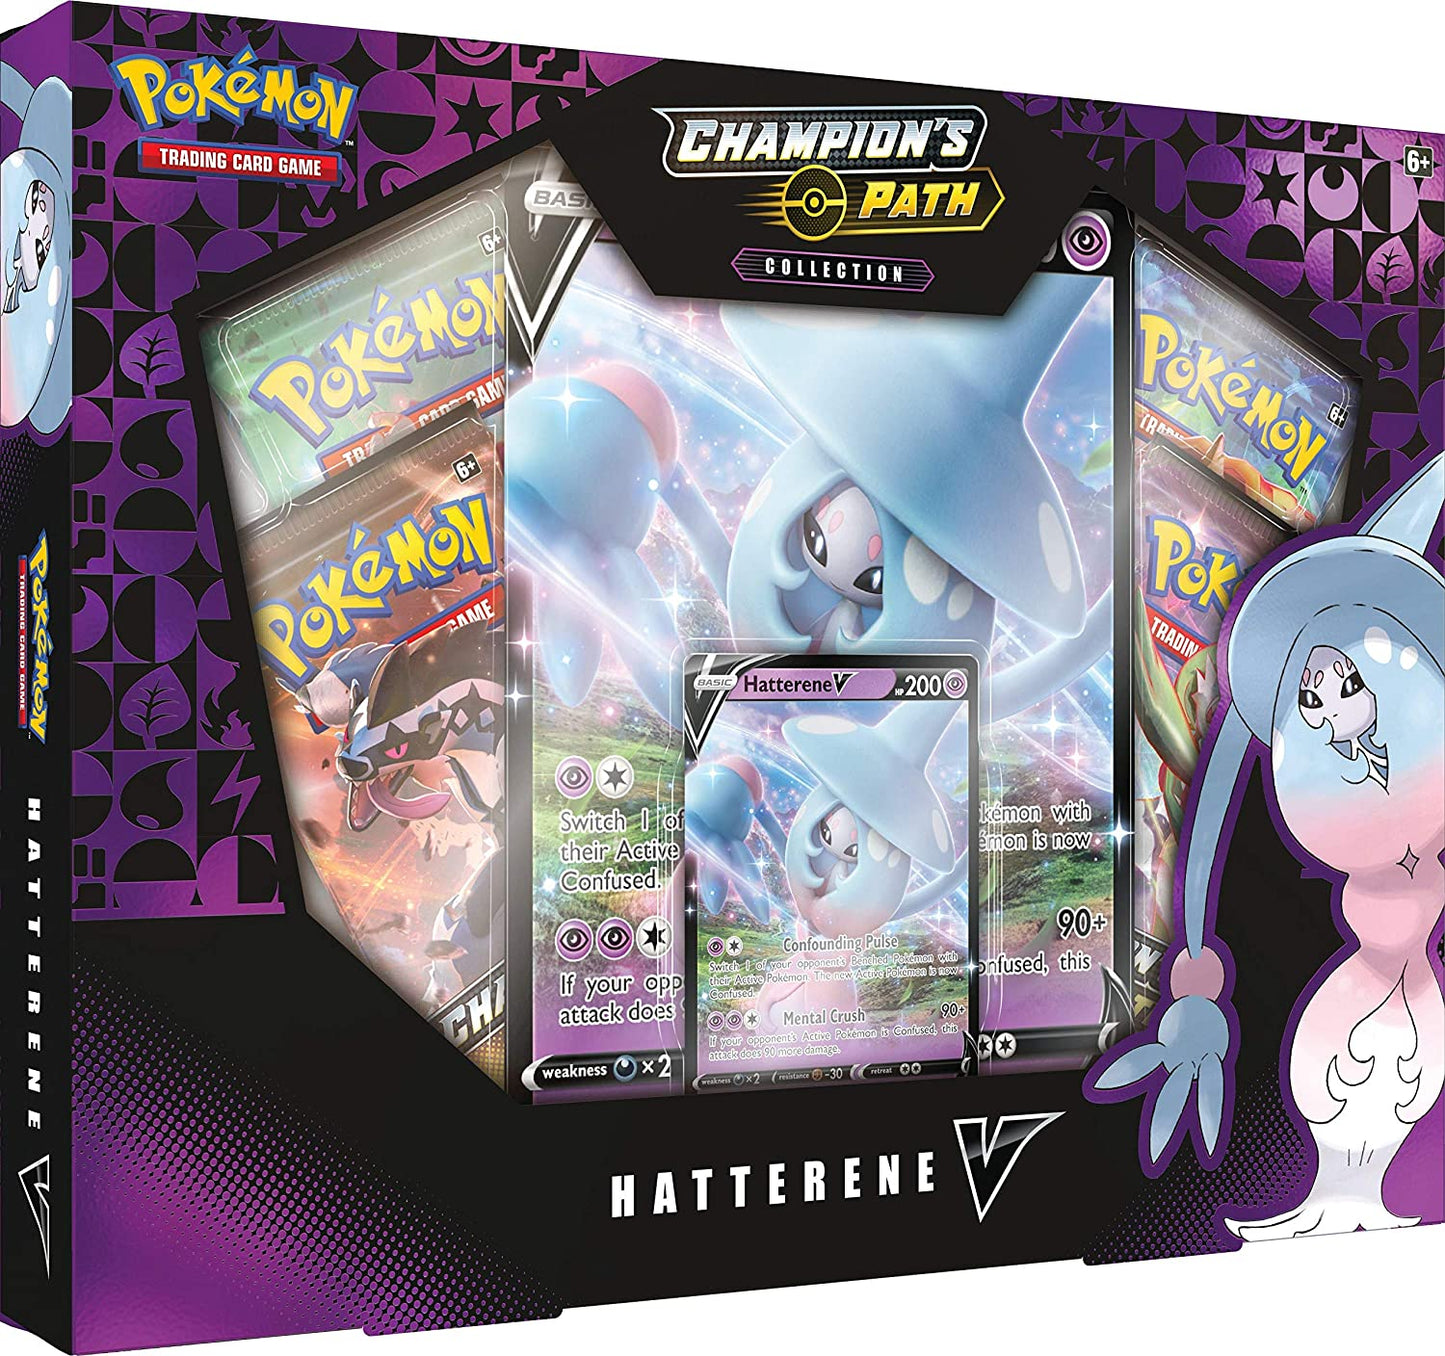 Pokémon - Champion's Path Collection Hatterene V Box